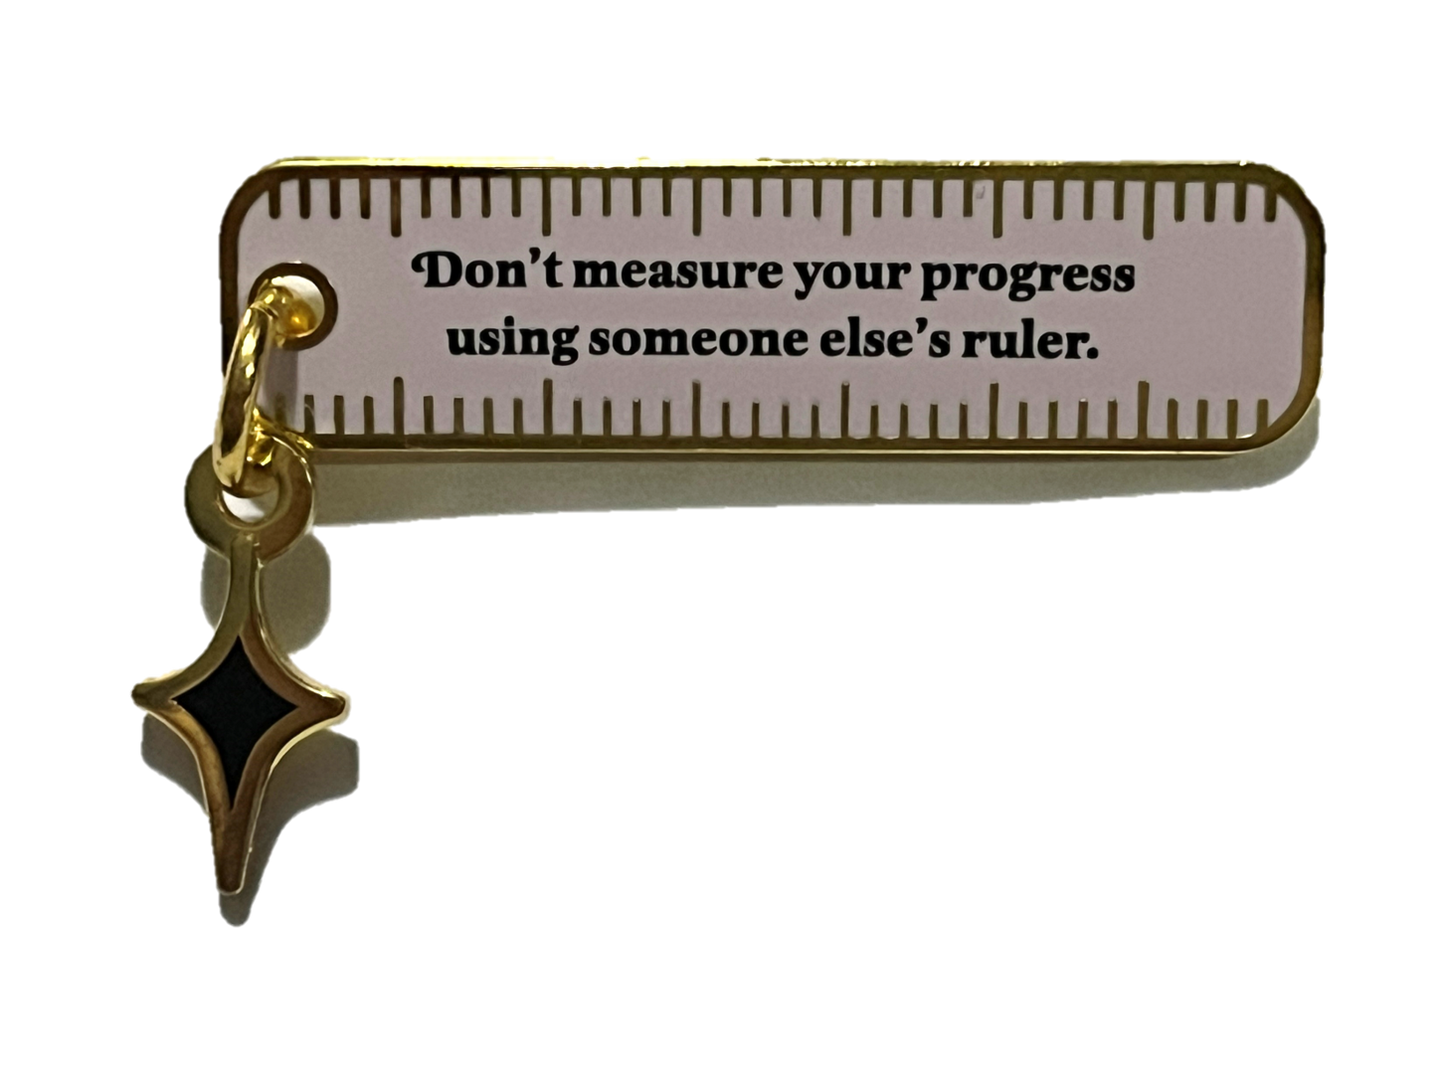 Don't measure your progress using someone else's ruler